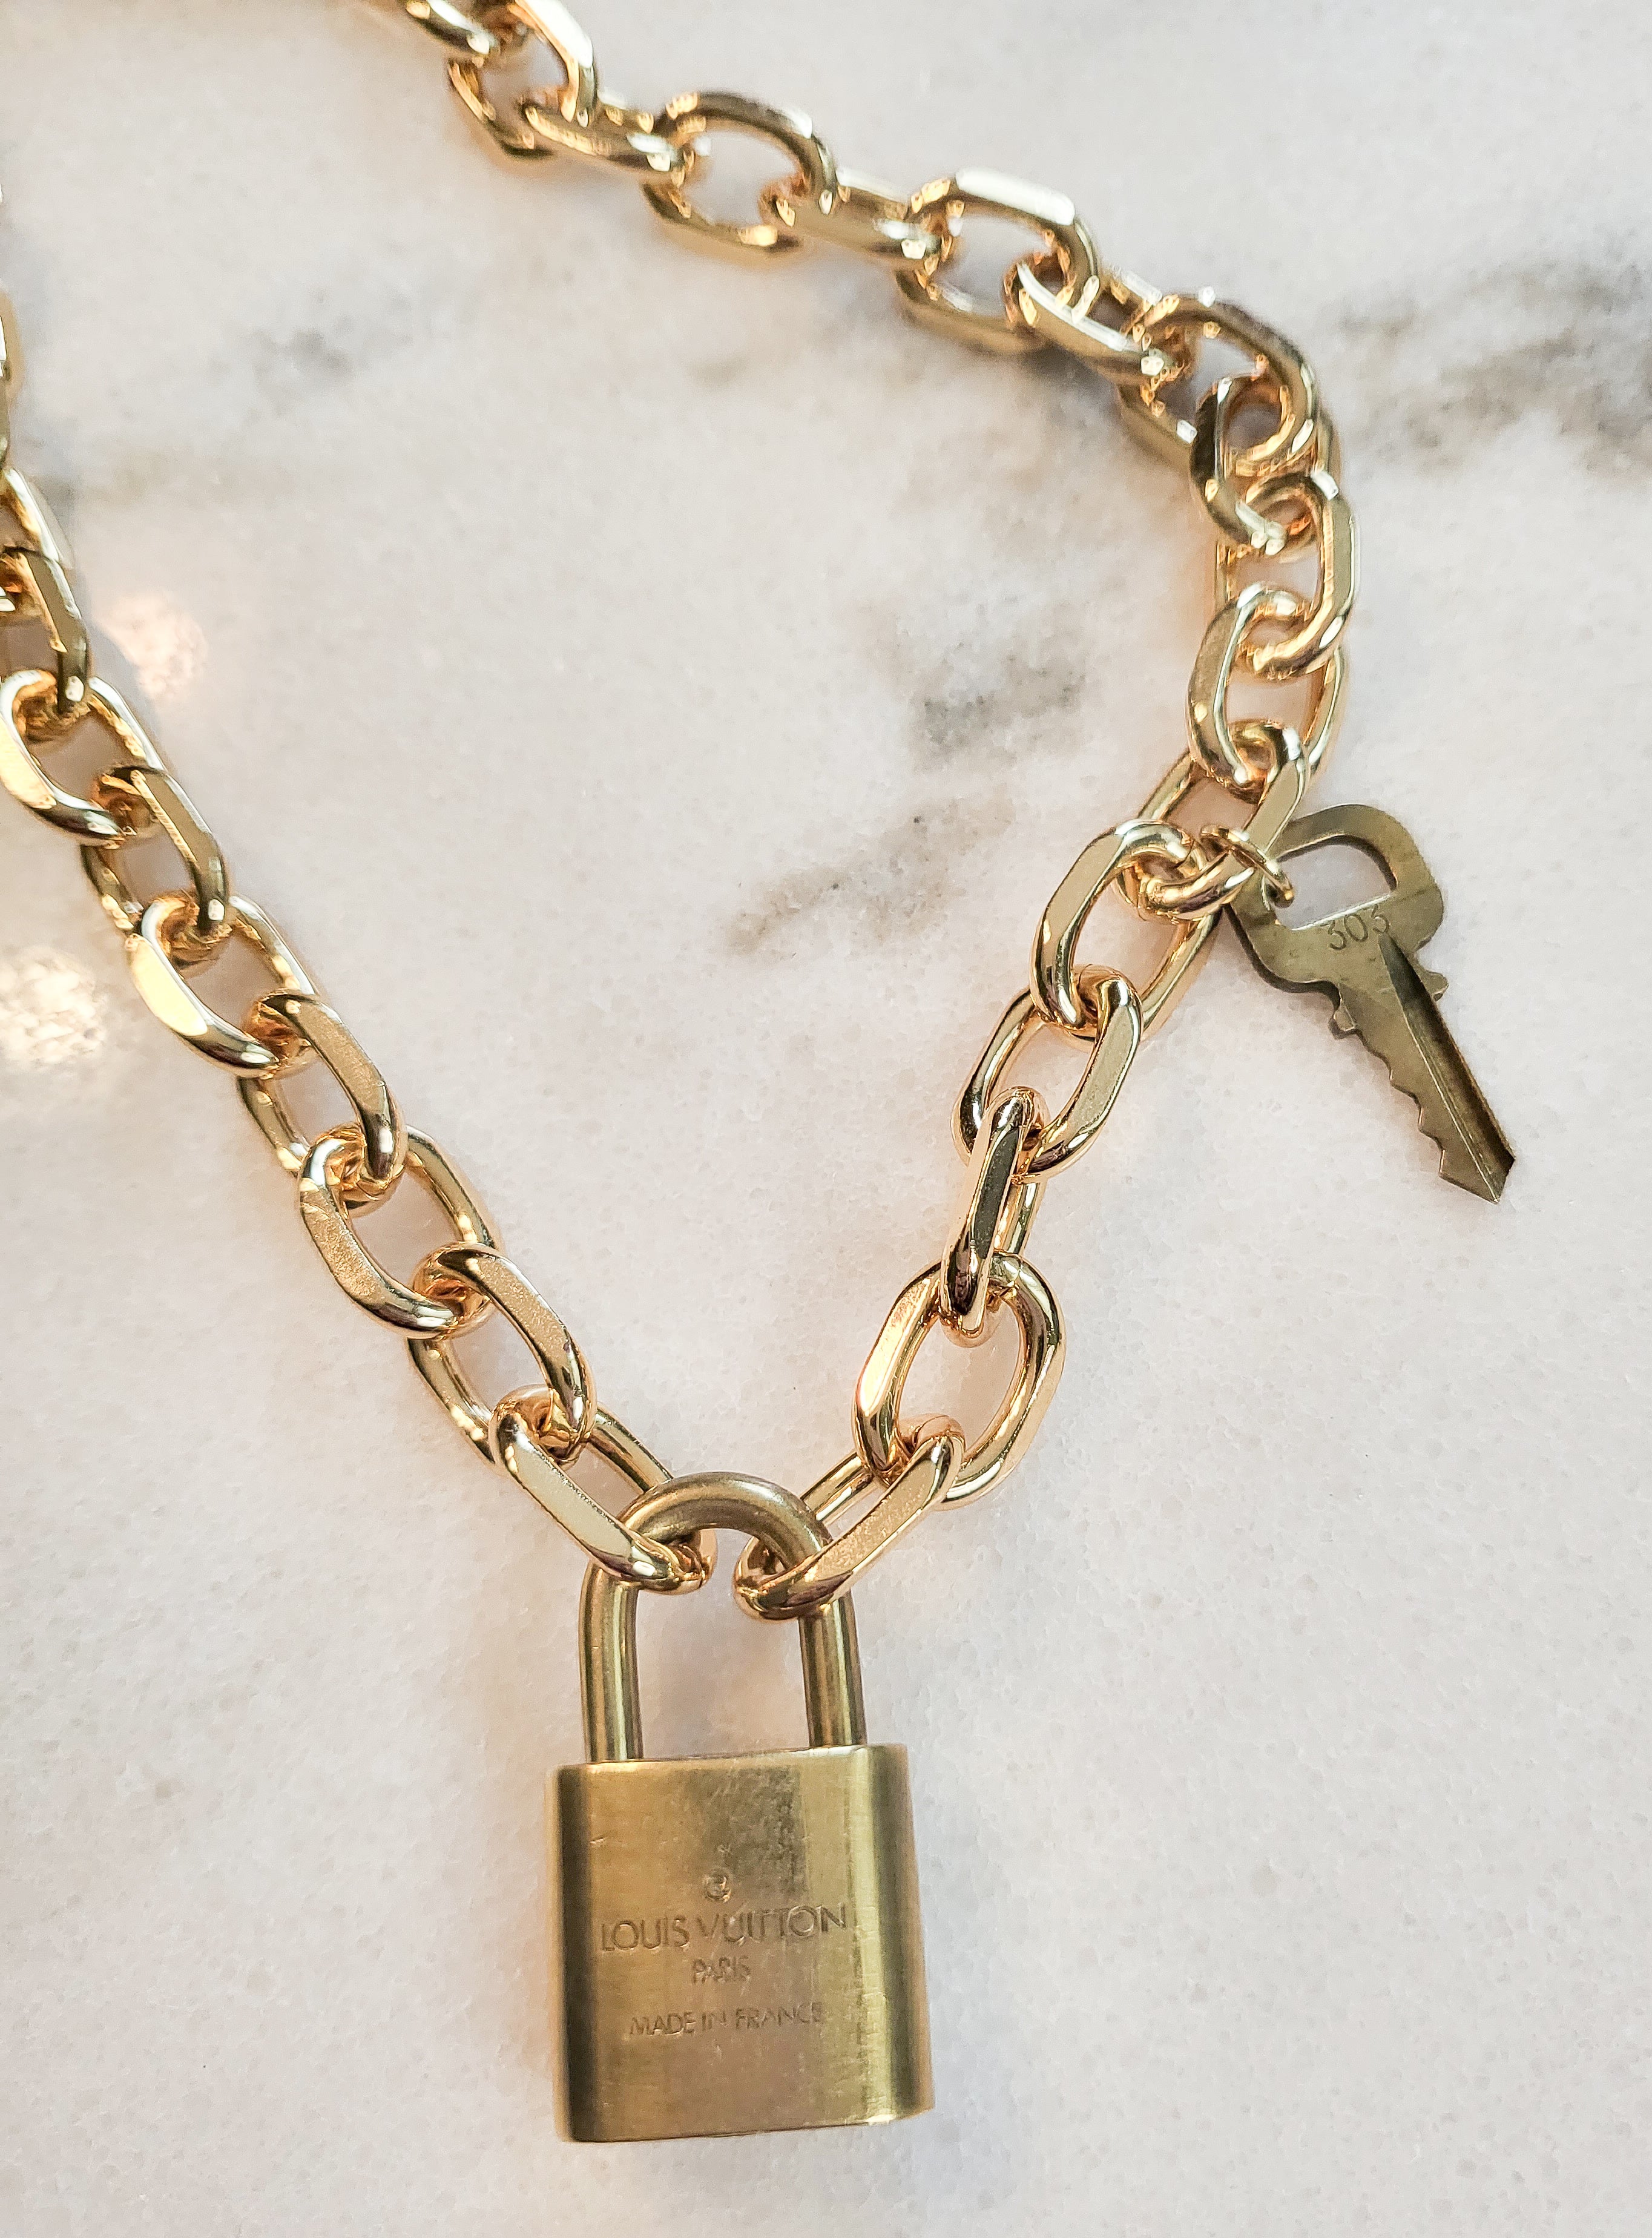 DIY Louis Vuitton Lock Necklace  YouTube